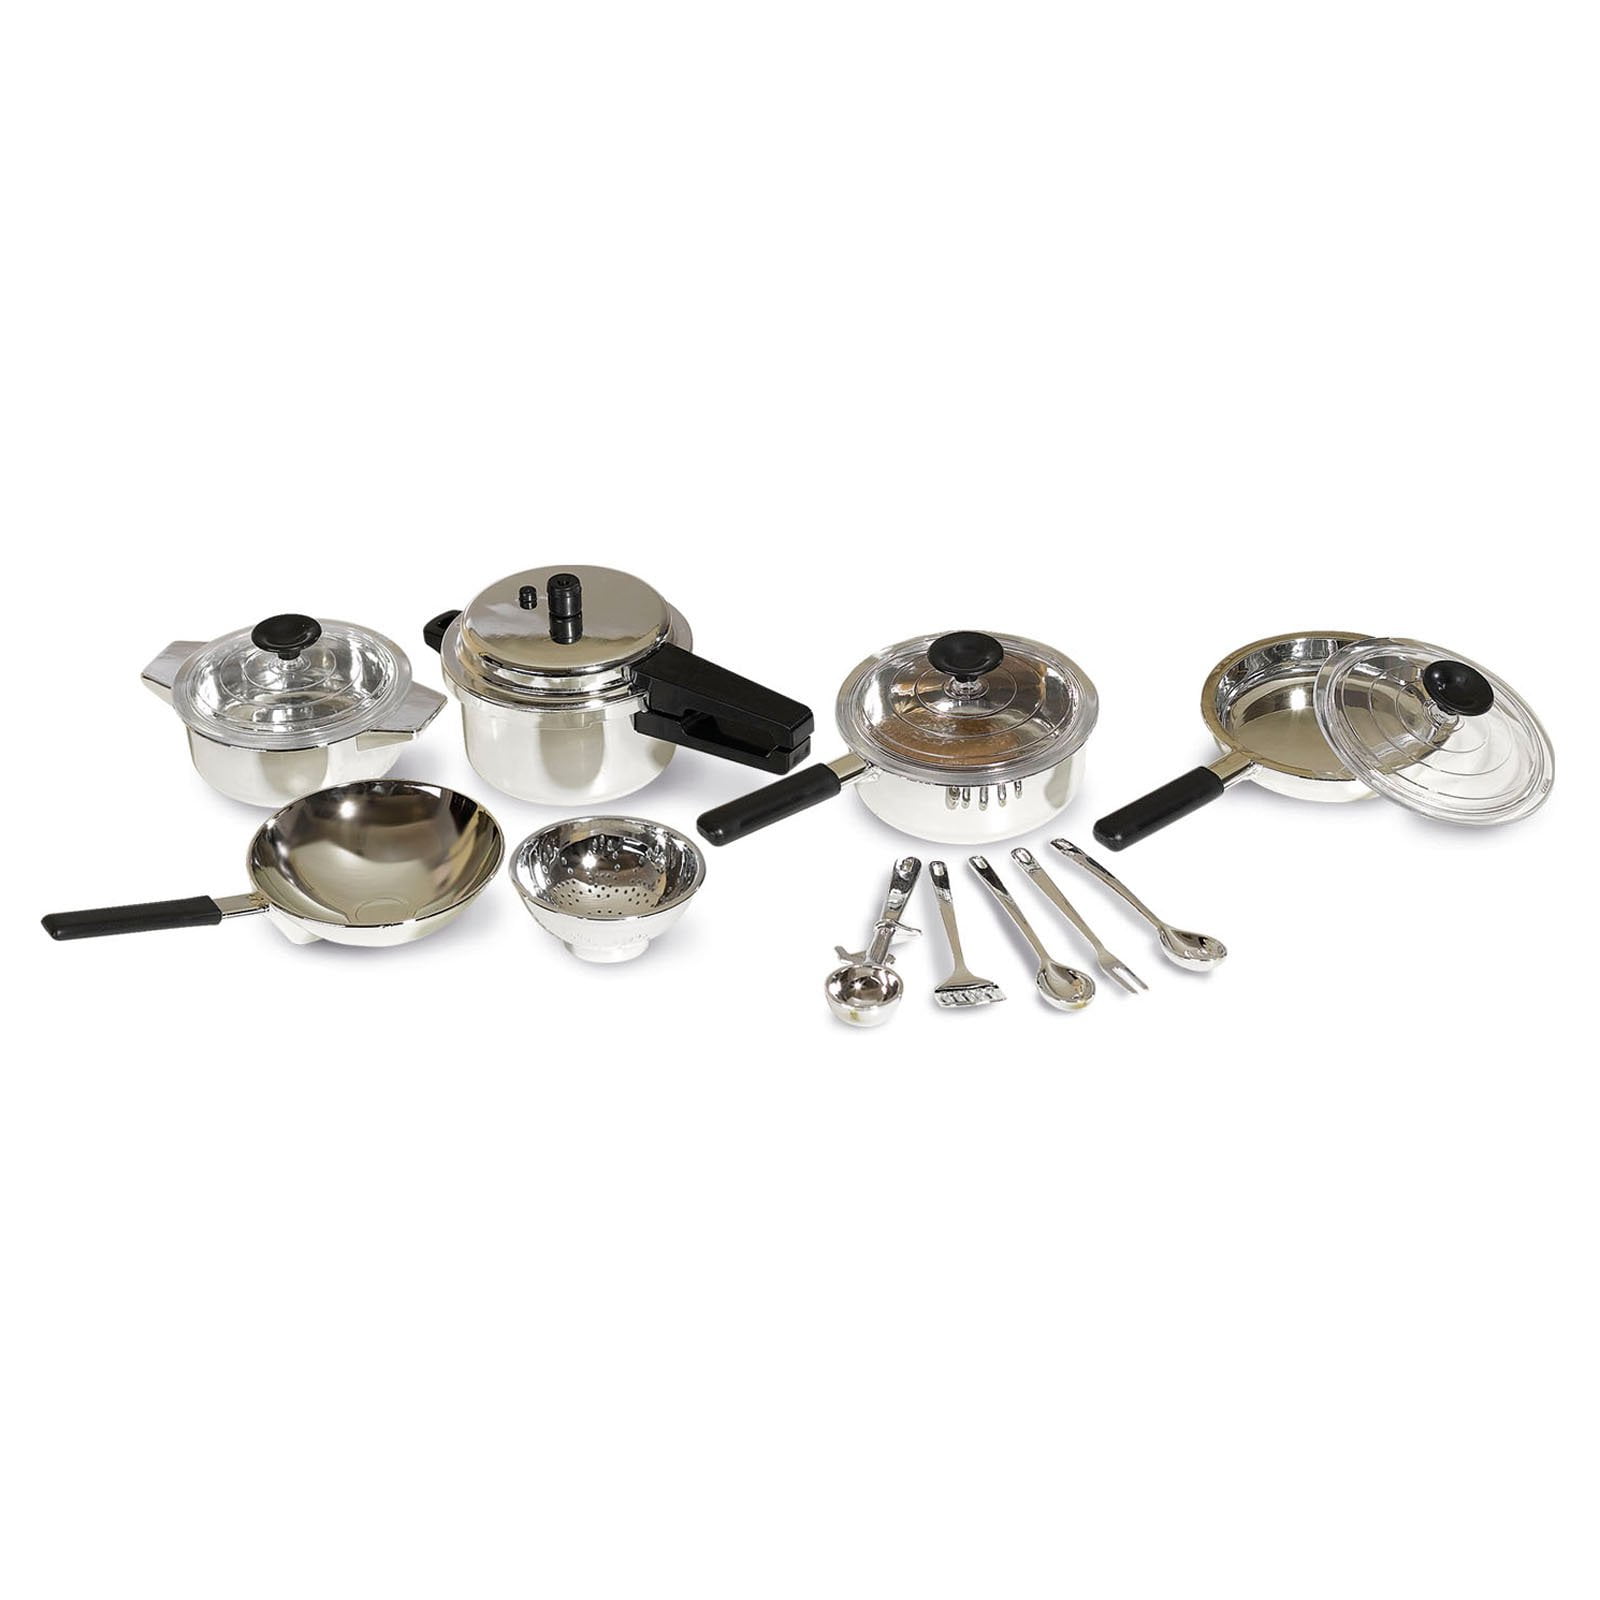 Casdon Pots and Pan Set Cooking Colander Chrome Silver Little Cook Kitchen Play